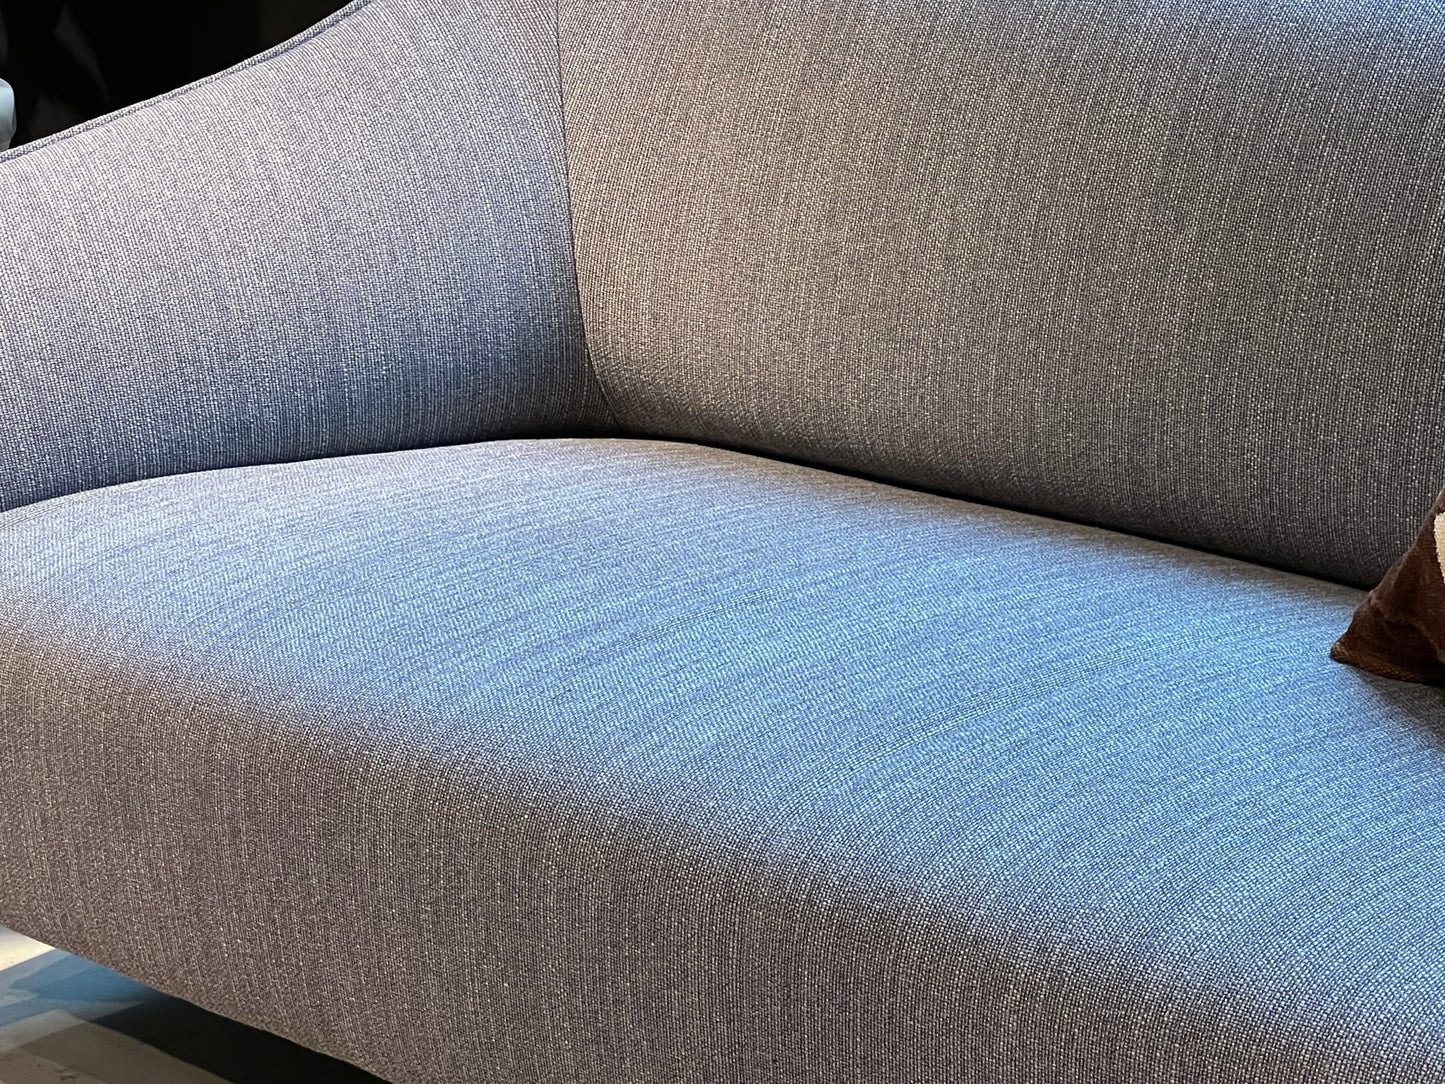 Freistil Freistil Rolf Benz 132 one-piece sofa close up in blue fabric